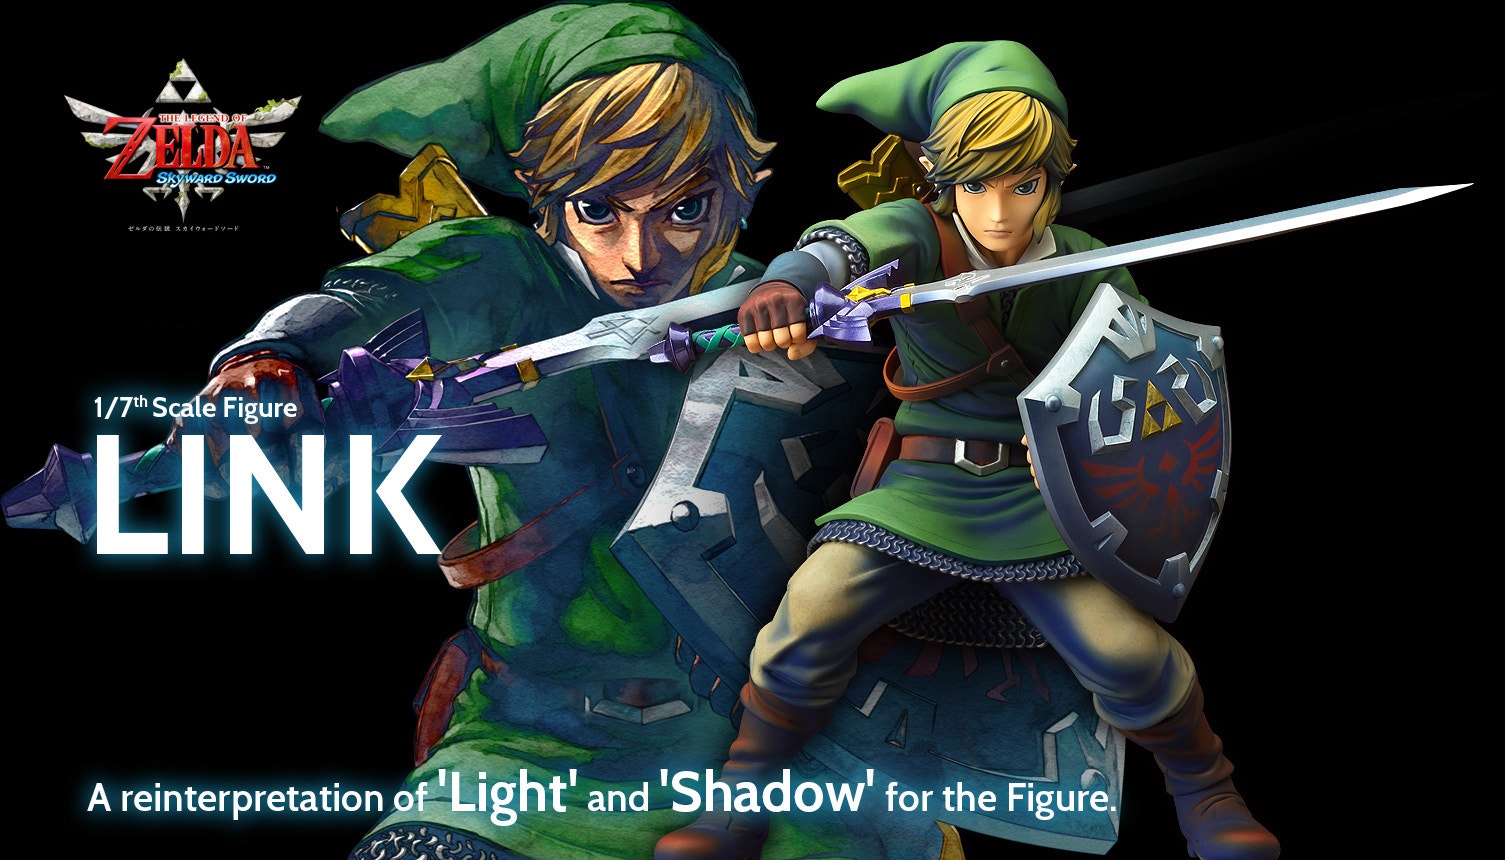 The Legend of Zelda: Skyward Sword - 1/7th Scale Figure Link